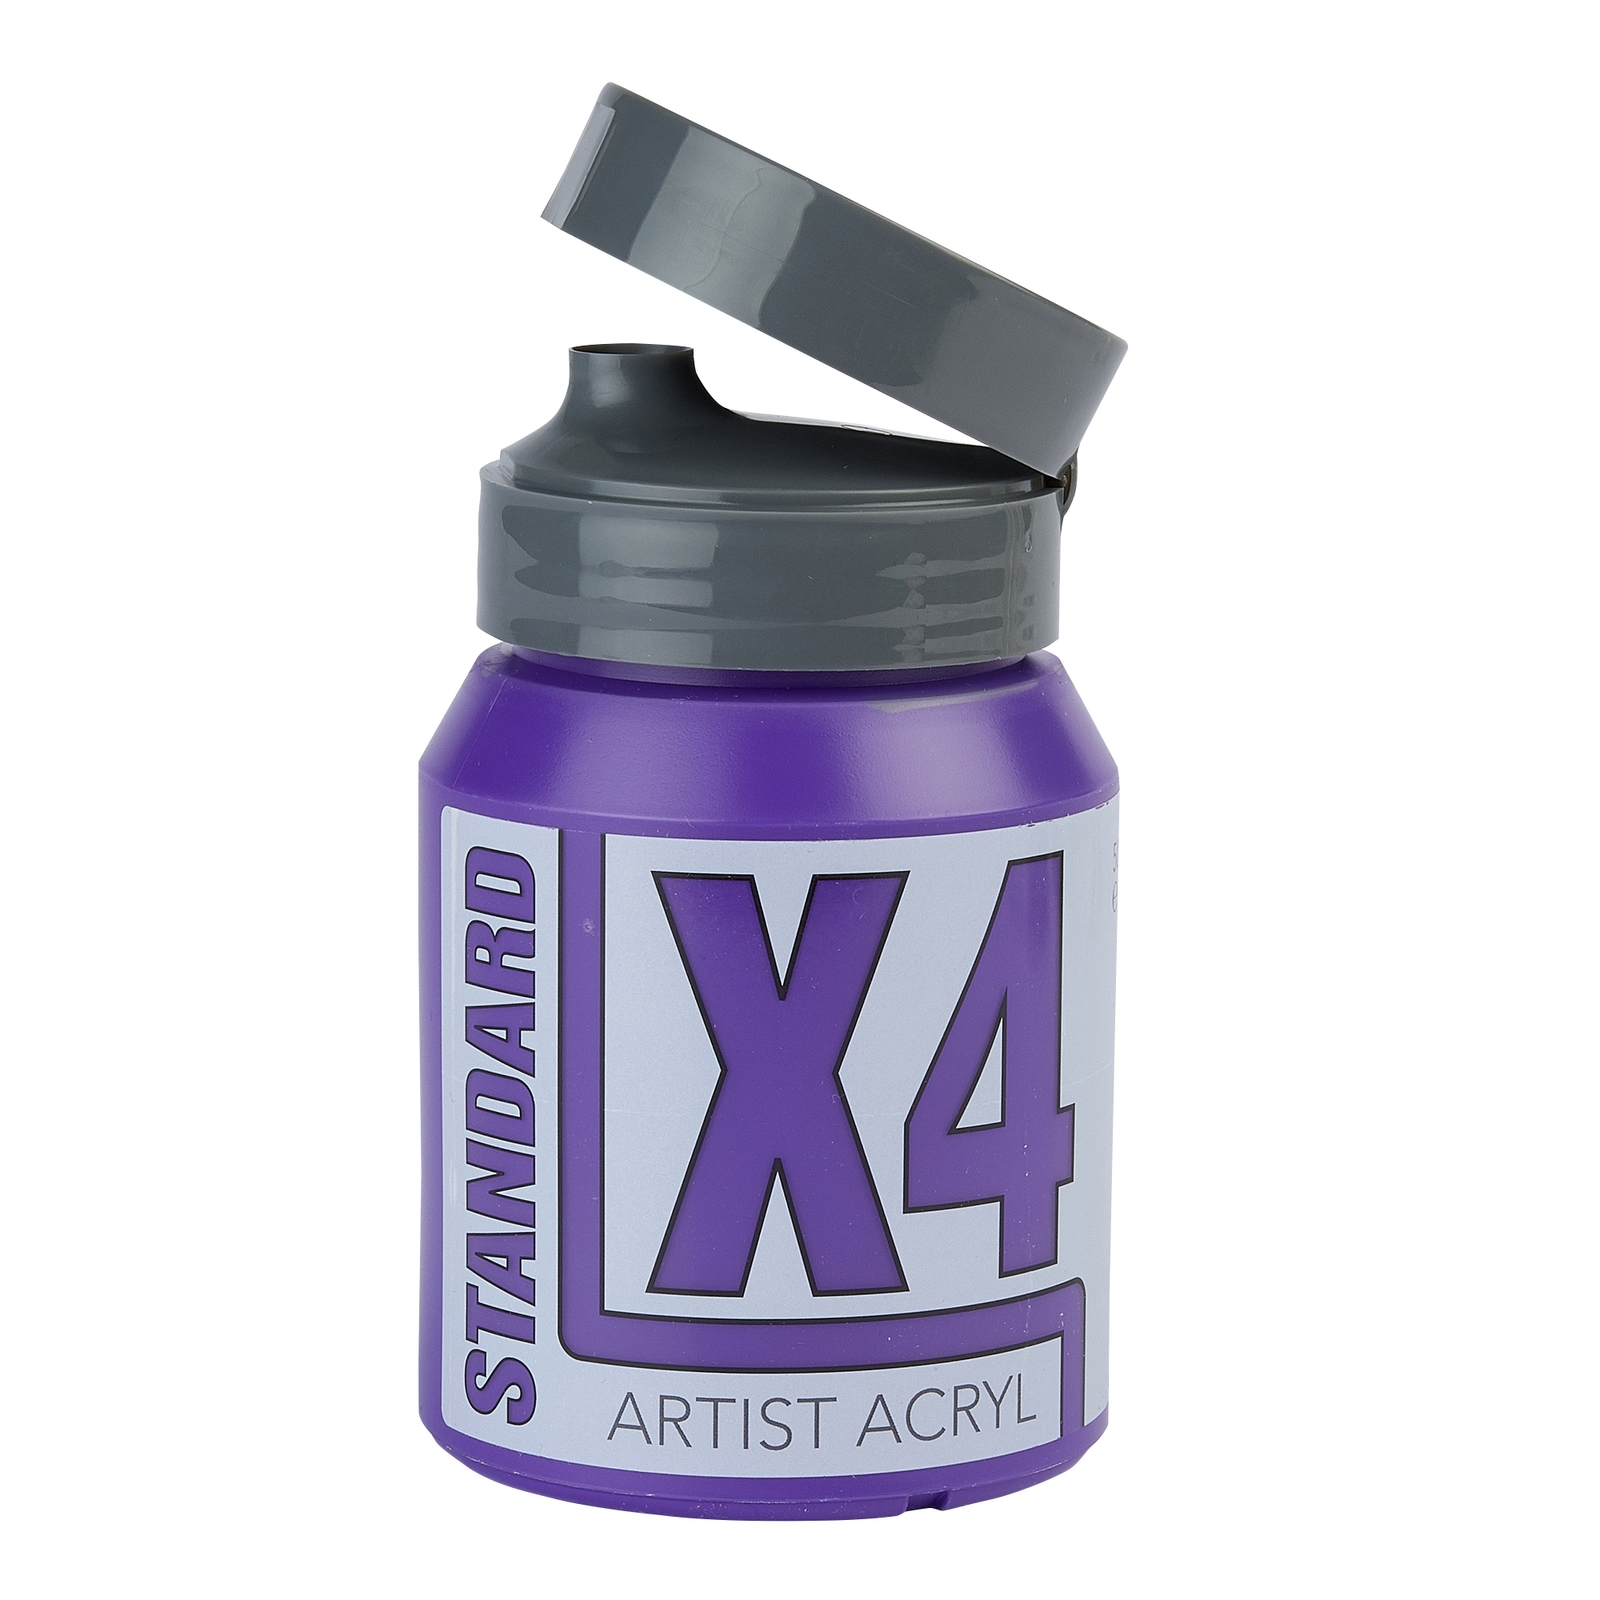 Specialist Crafts X4 Standard Permanent Blue Violet Acryl/Acrylic Paint - 500ml - Each